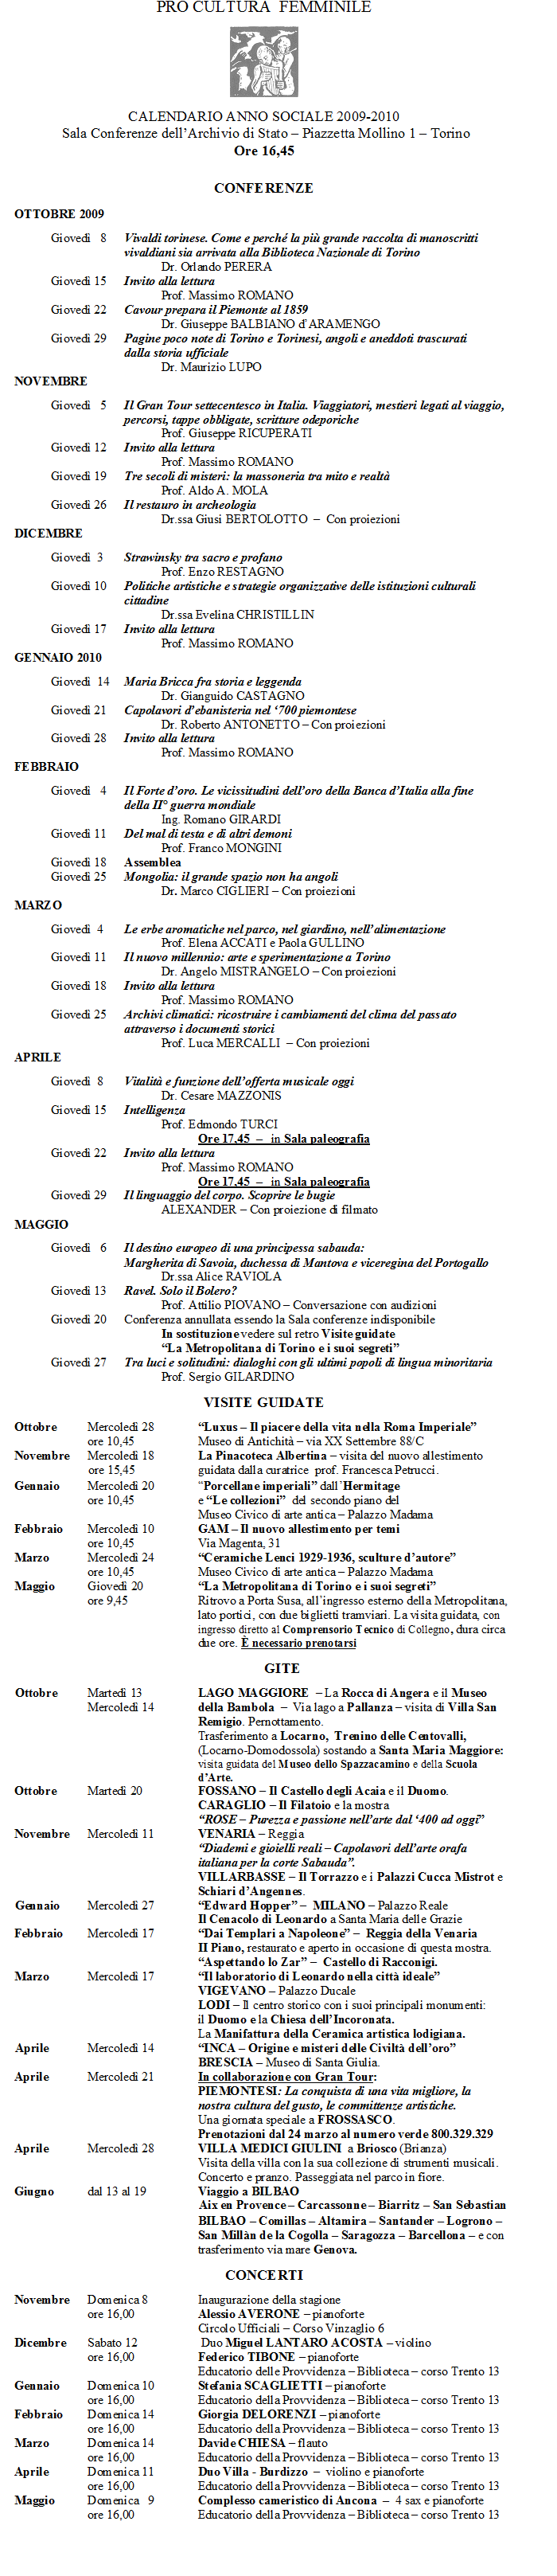 programma 2009-10 giusto